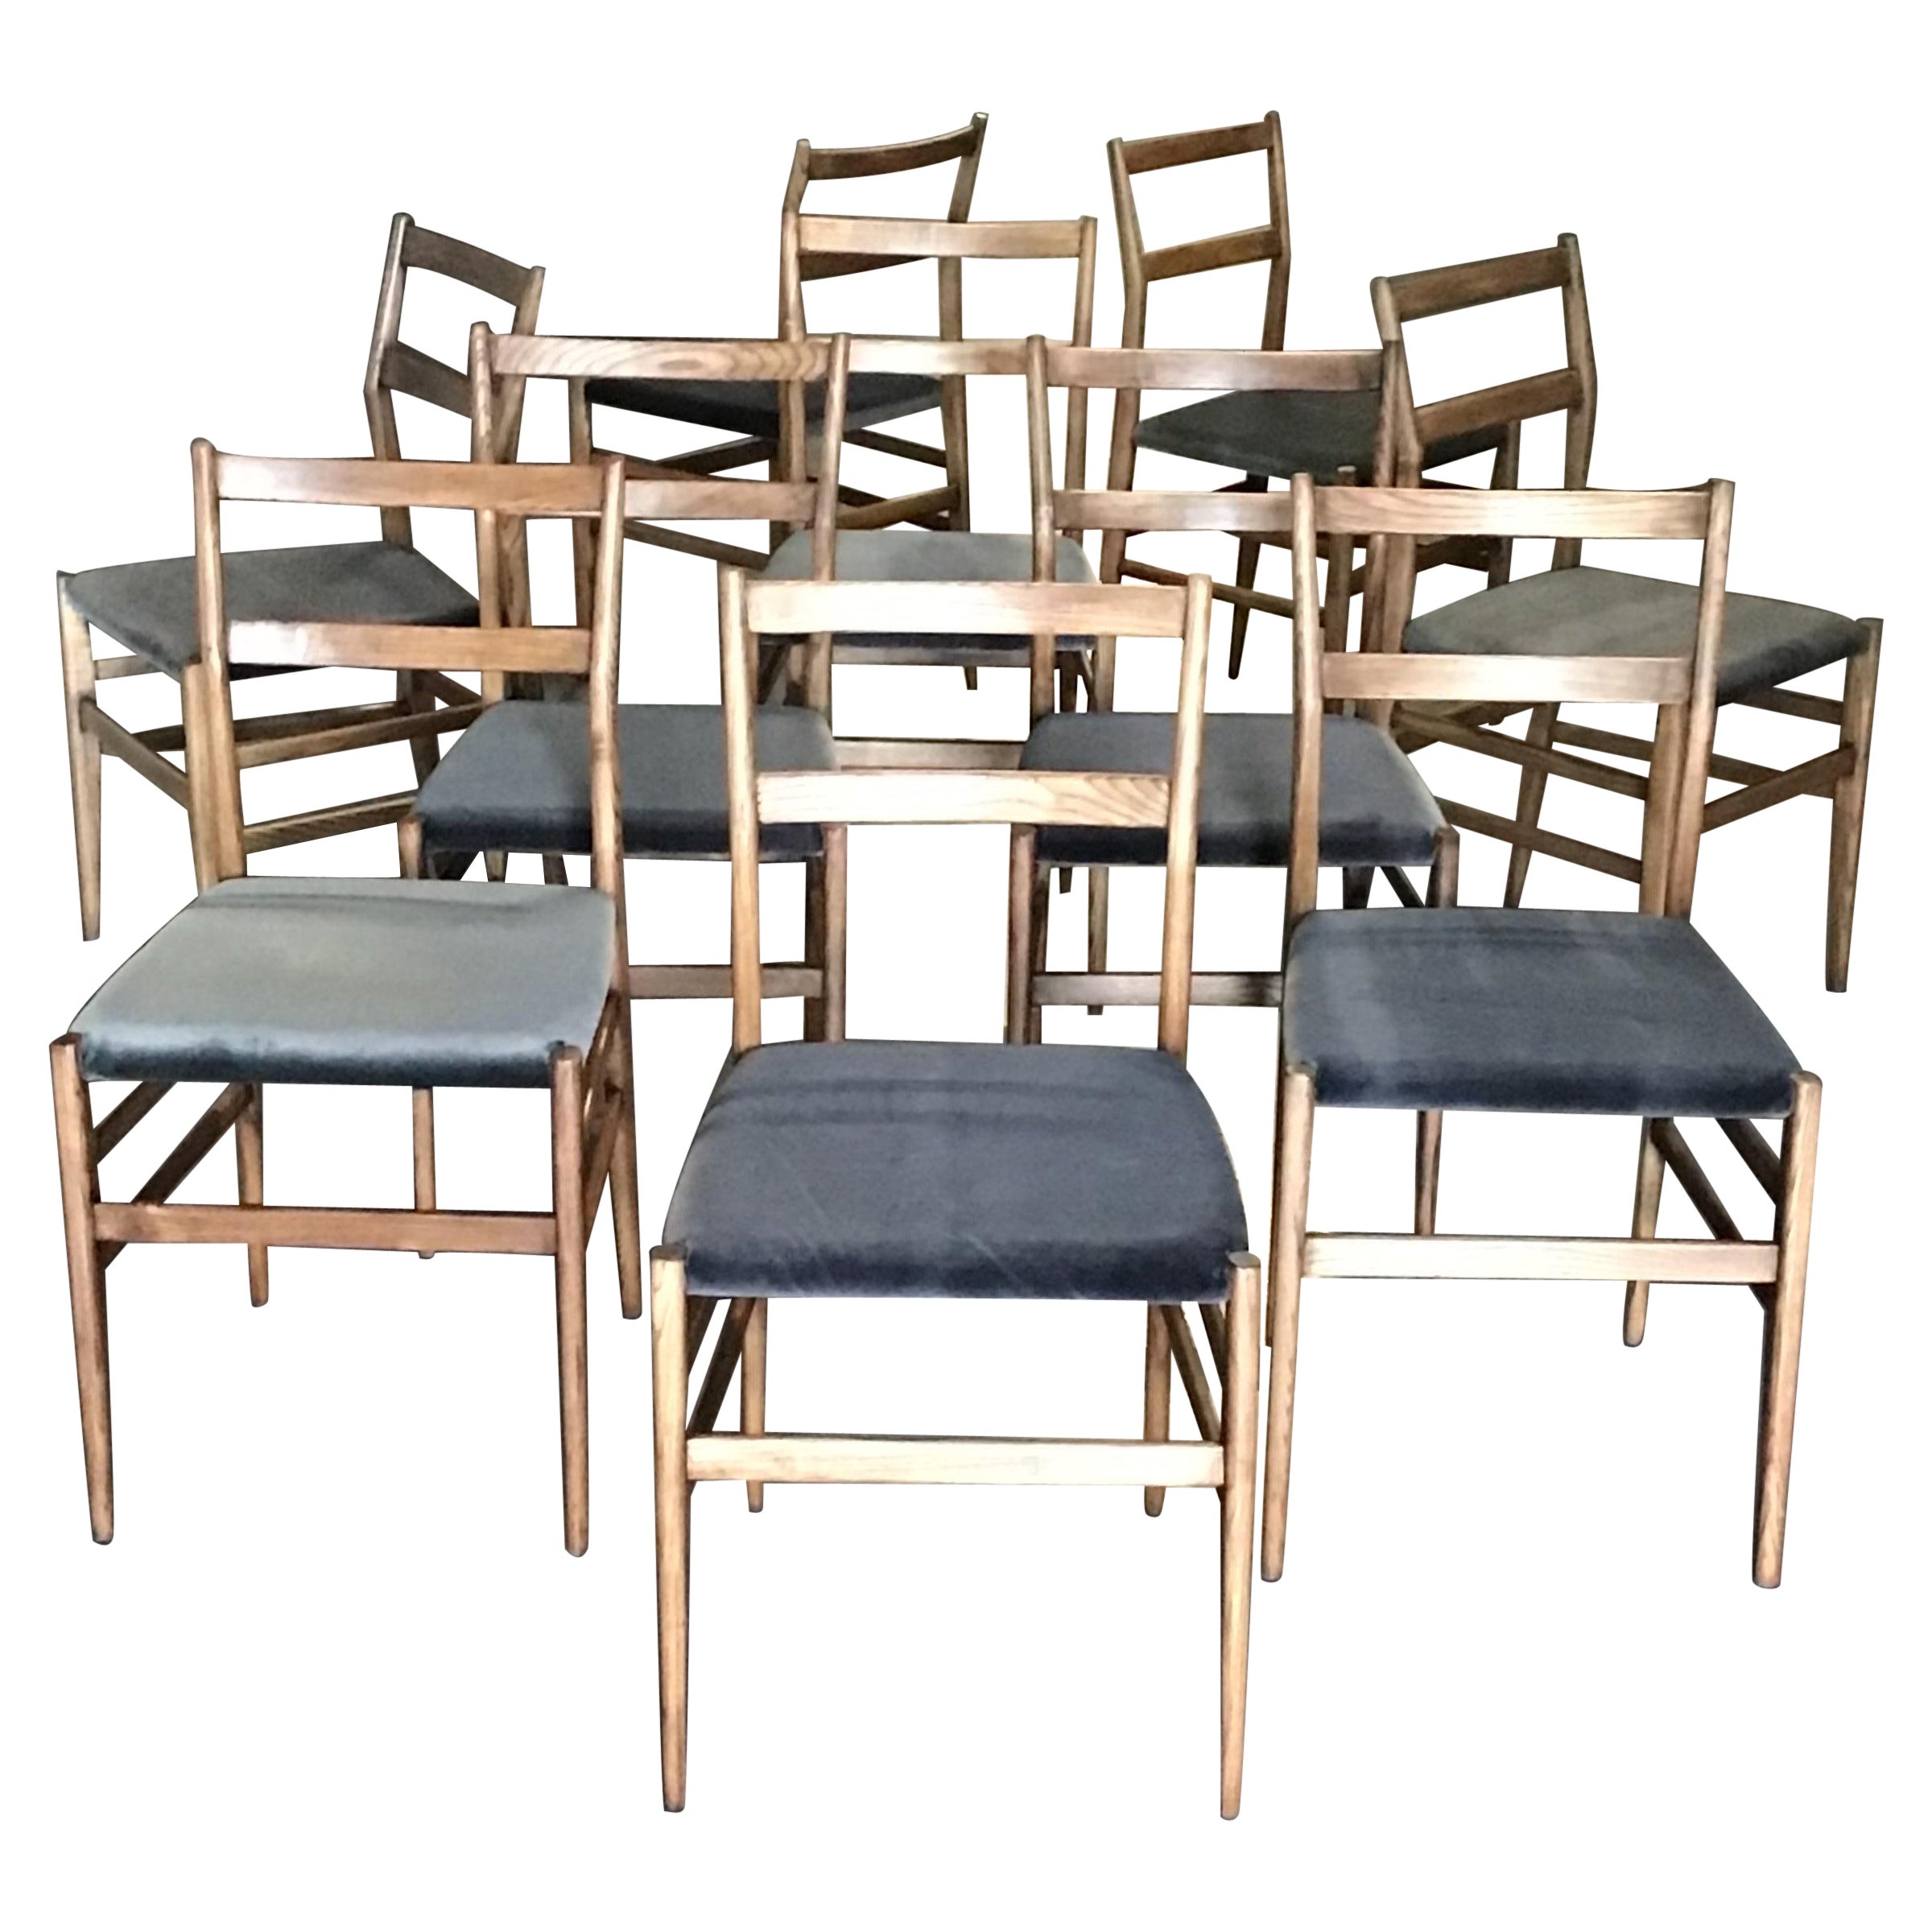 Original 1950's Gio Ponti Leggera Dining Chairs by Cassina. Set of 10 